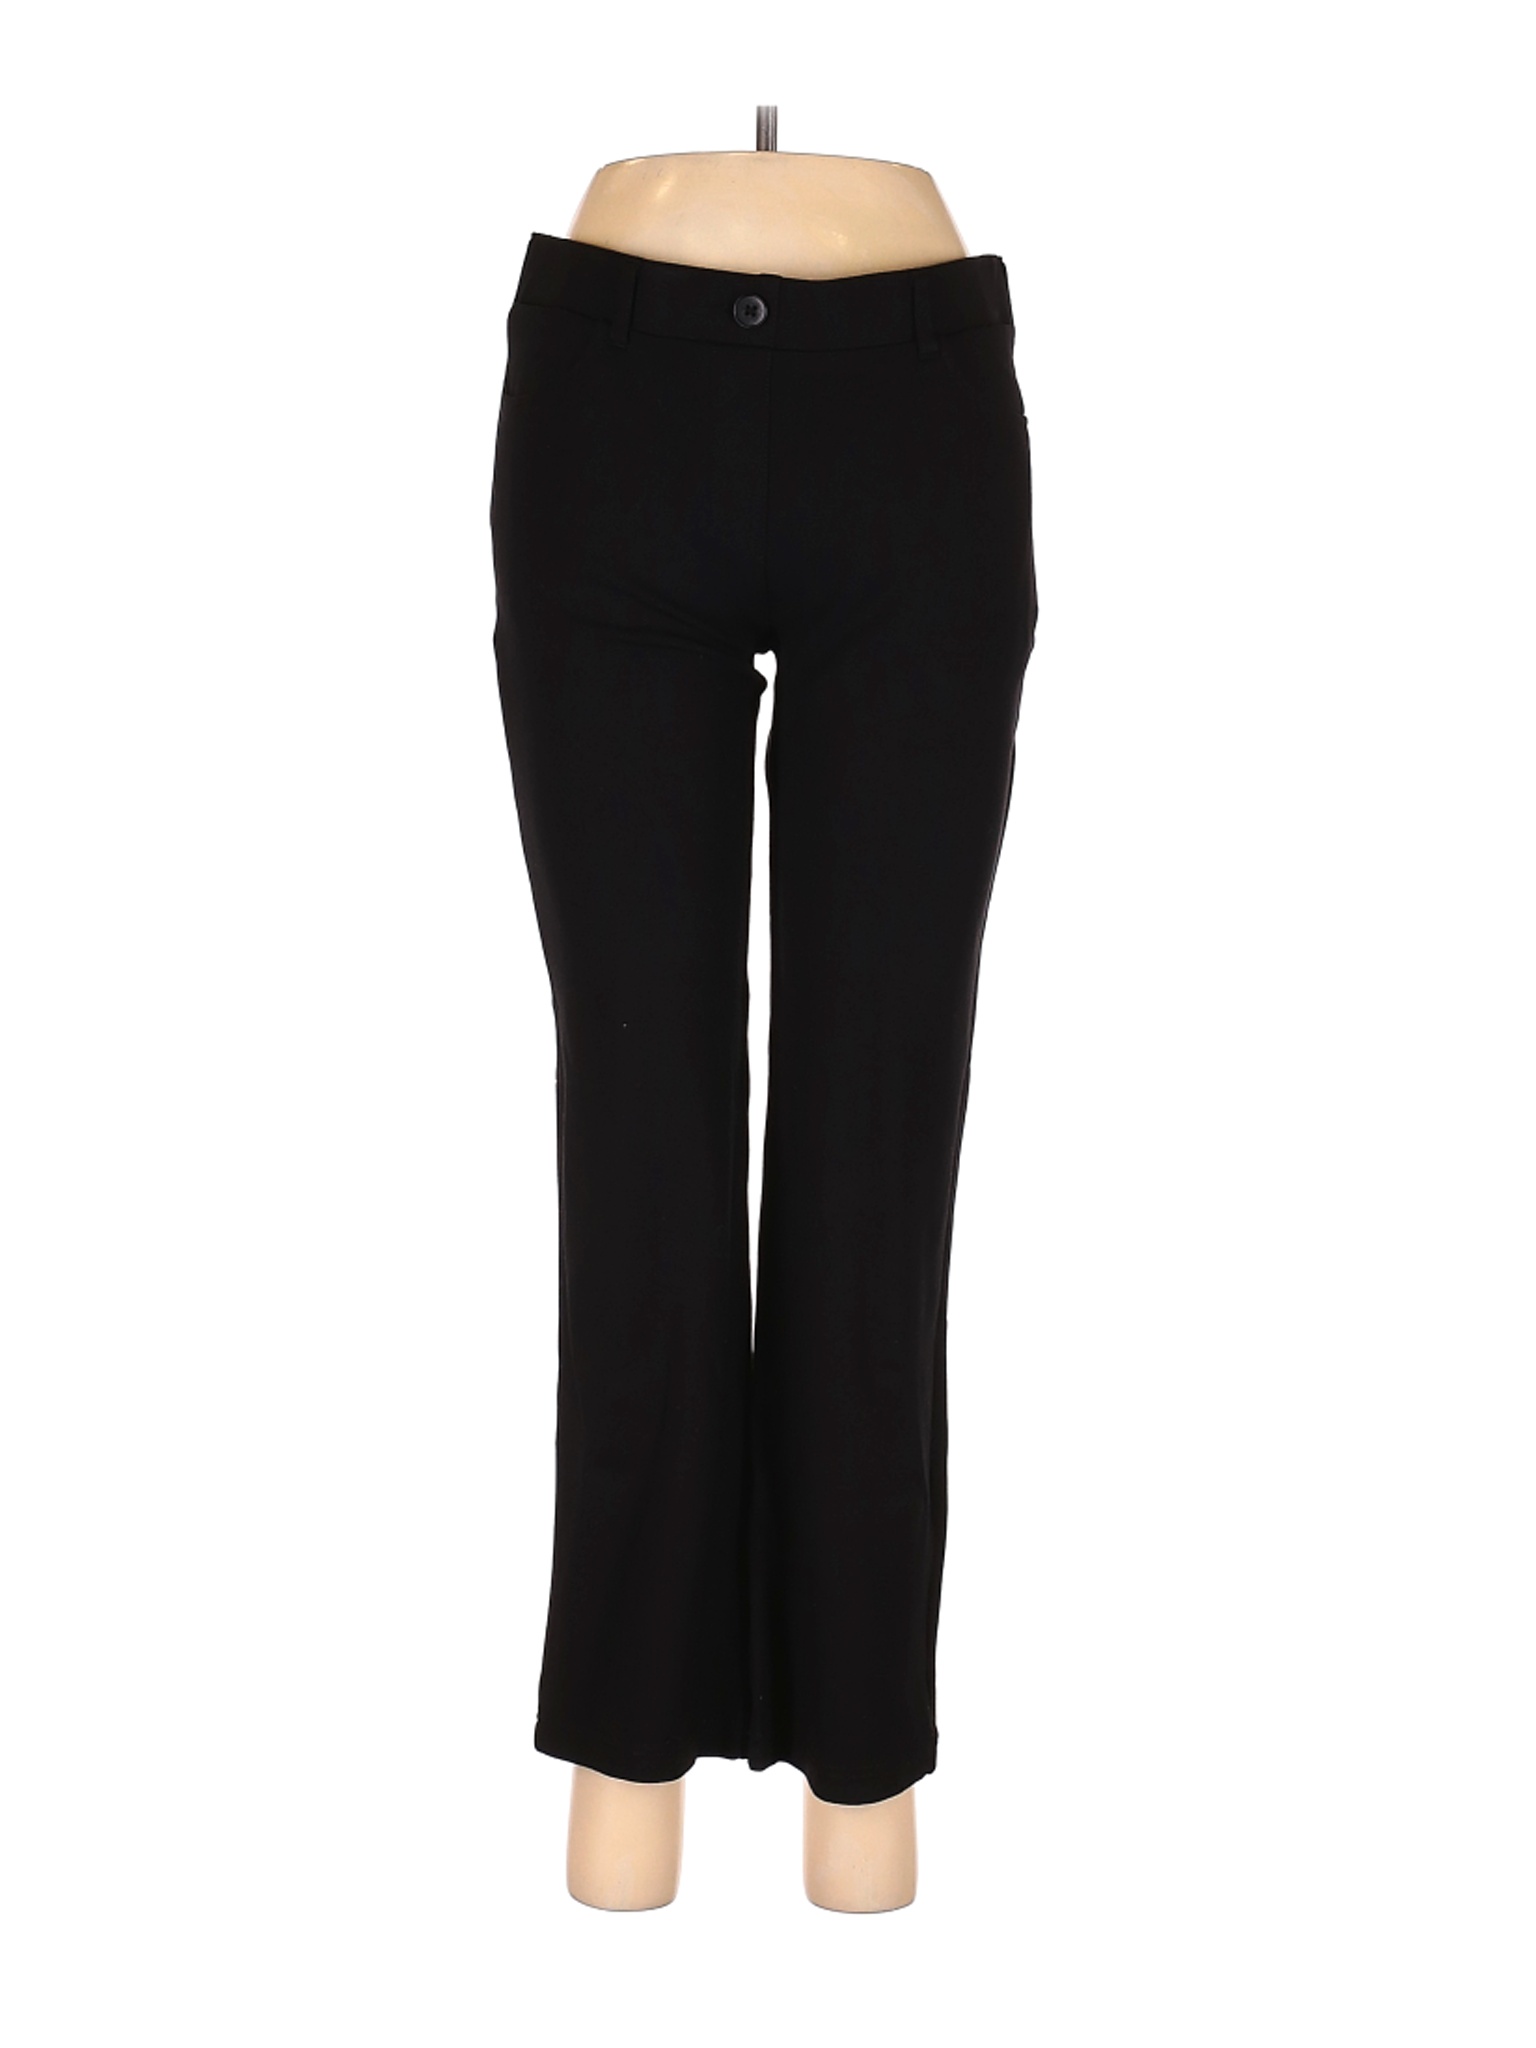 Betabrand Women Black Casual Pants L Petites | eBay